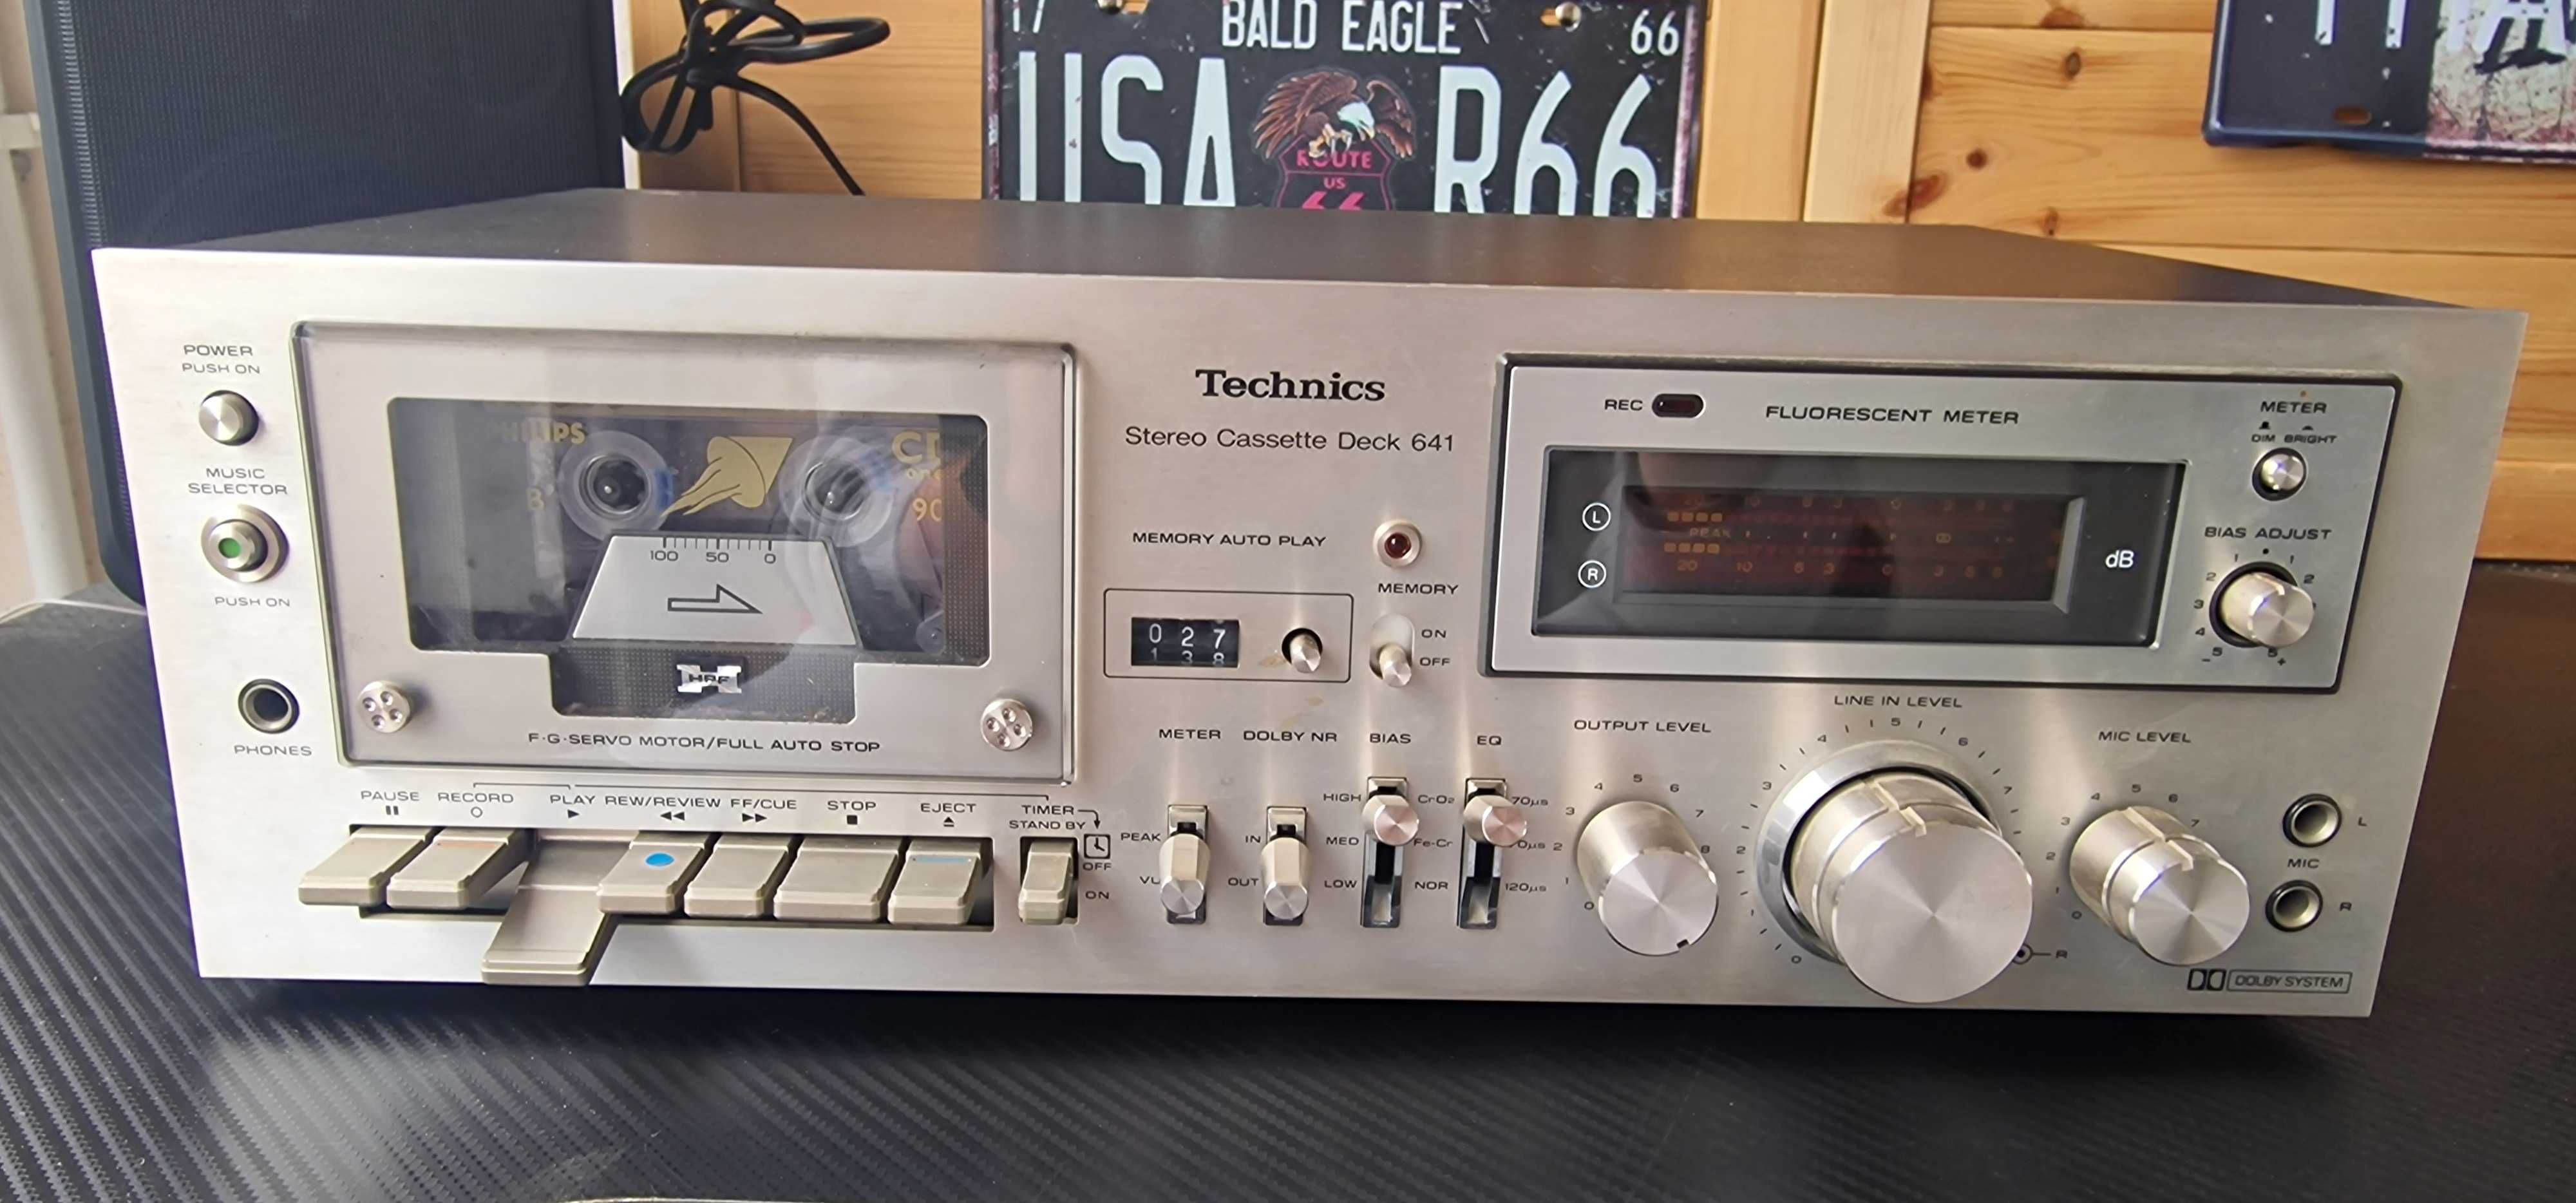 Technics RS641 kultowy magnetofon vintage